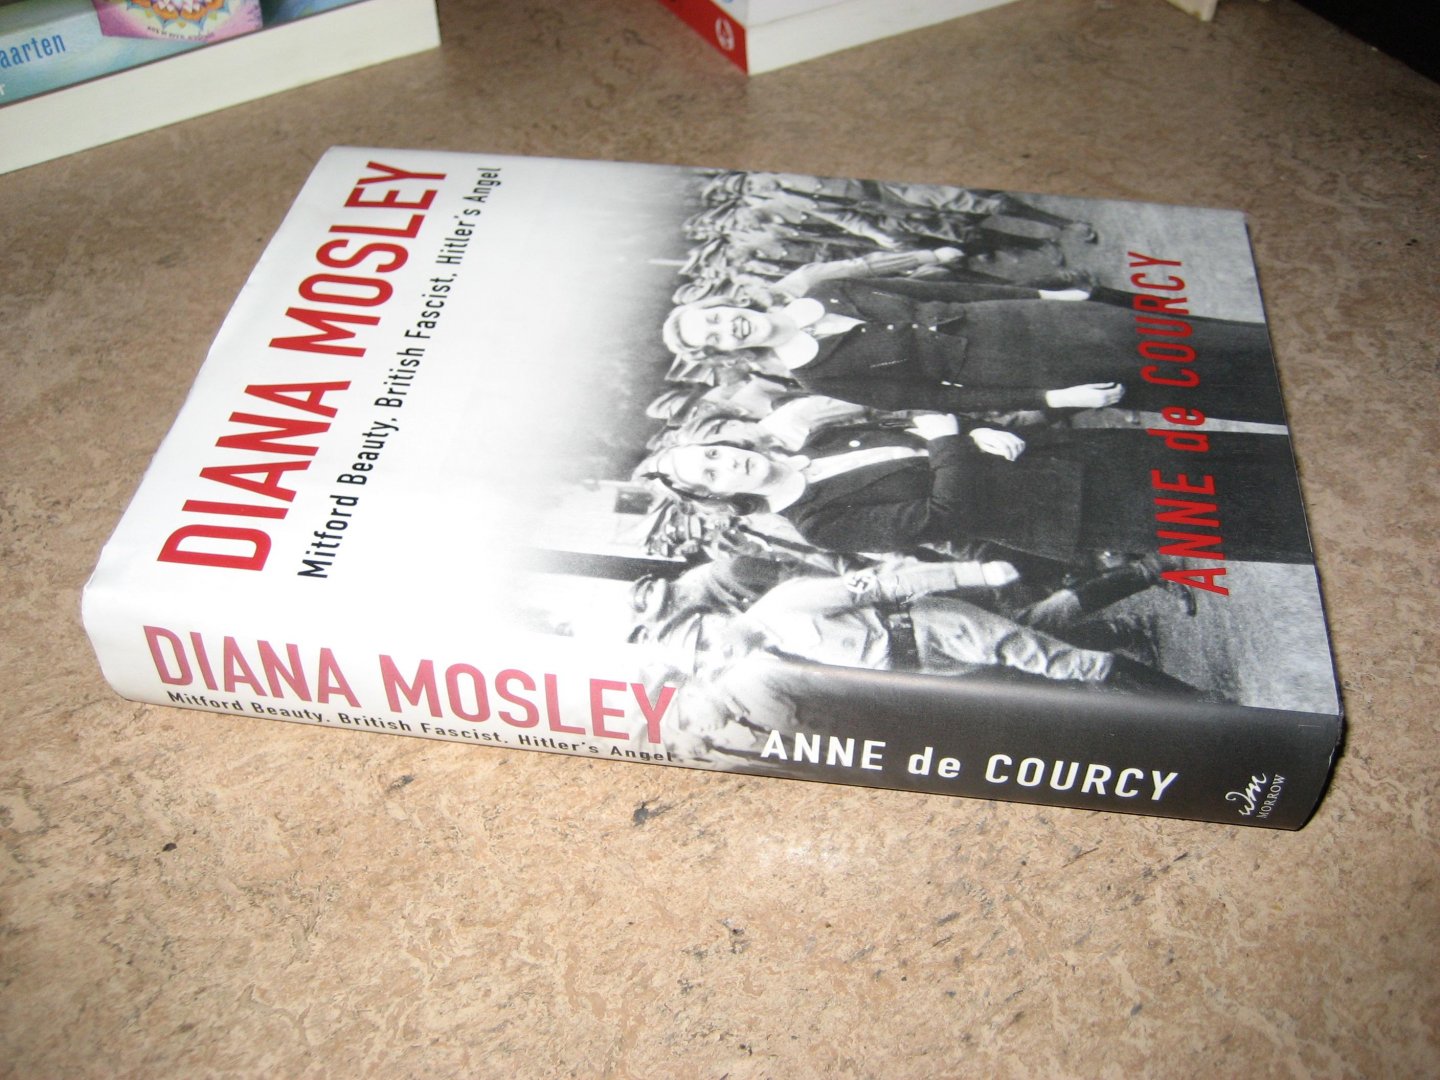 Courcy, Anne de - Diana Mosley. Mitford Beauty, British Fascist, Hitler's Angel